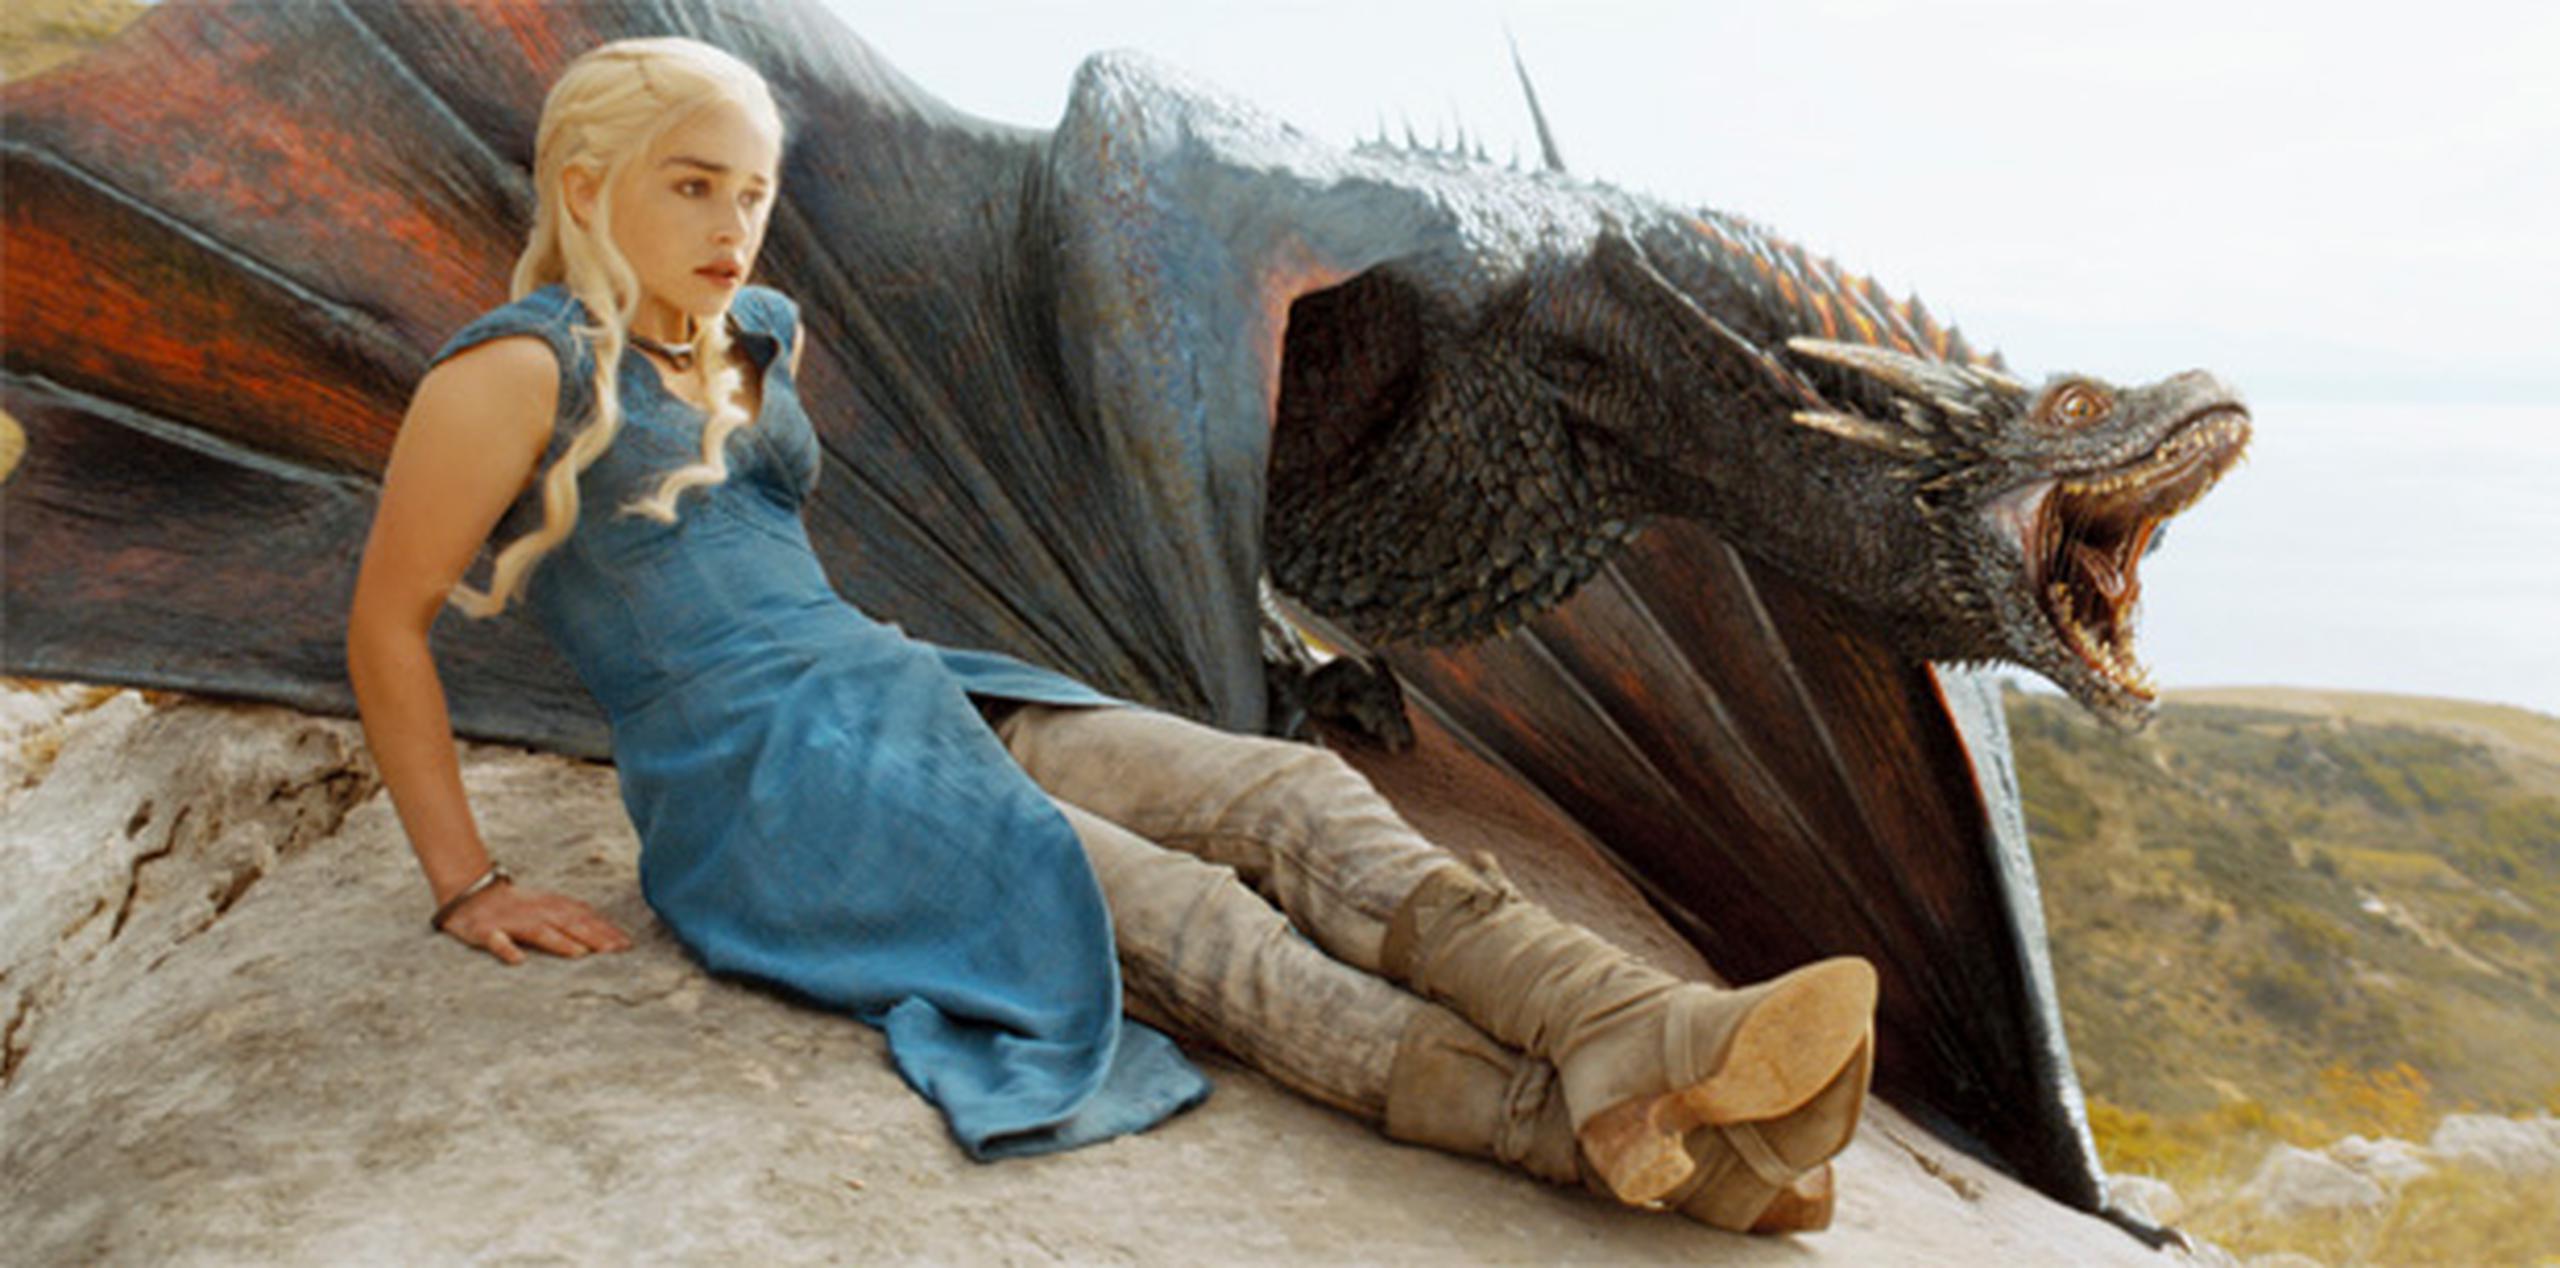 Emilia Clarke interpreta a "Daenerys Targaryen" en la popular serie de HBO.